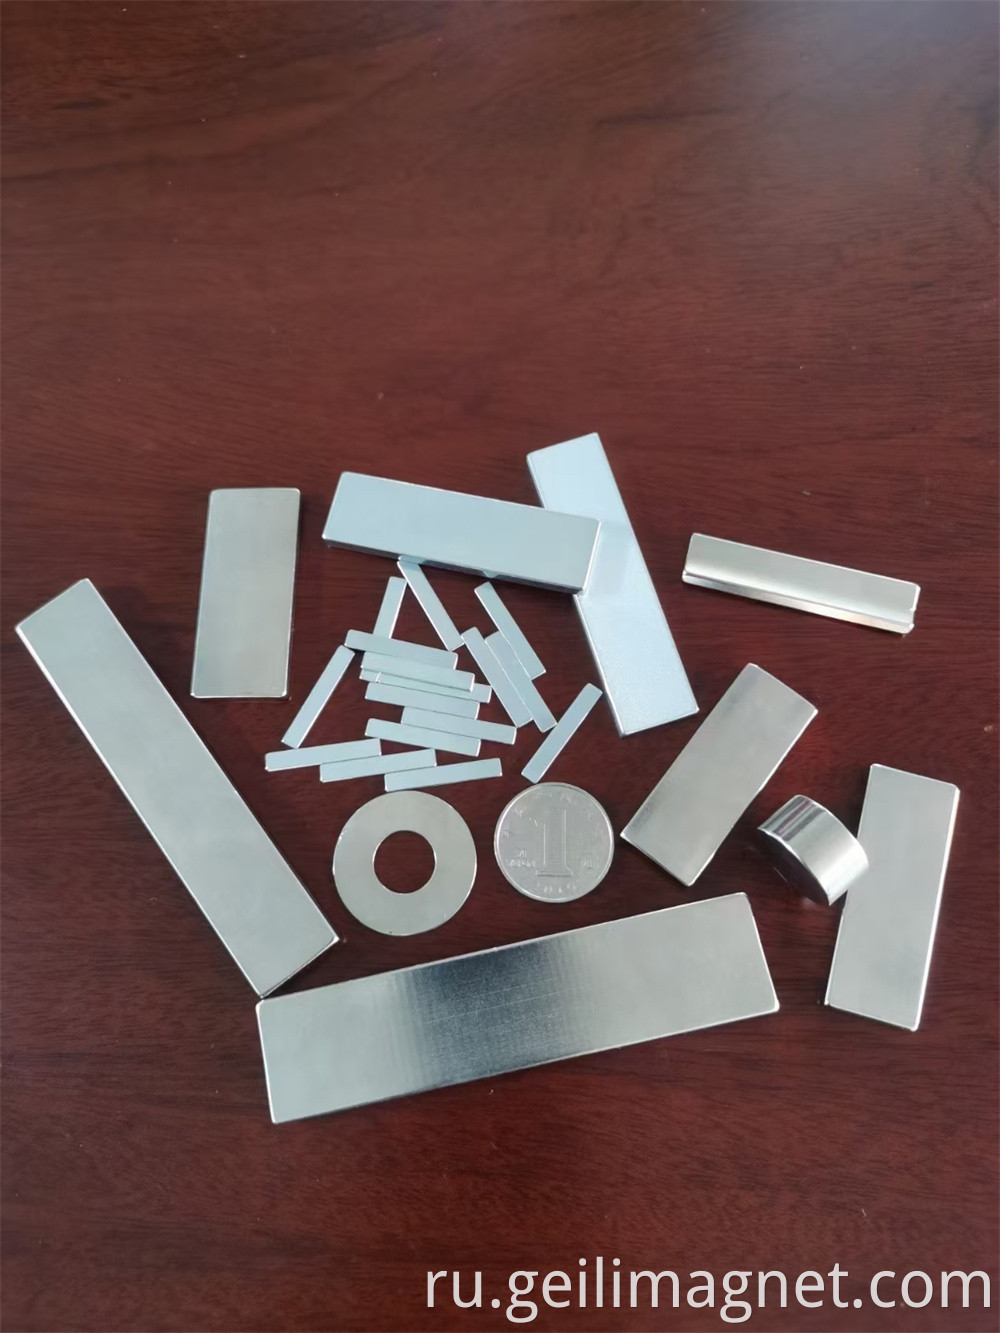 Full range of sintered Ndfeb circular magnets